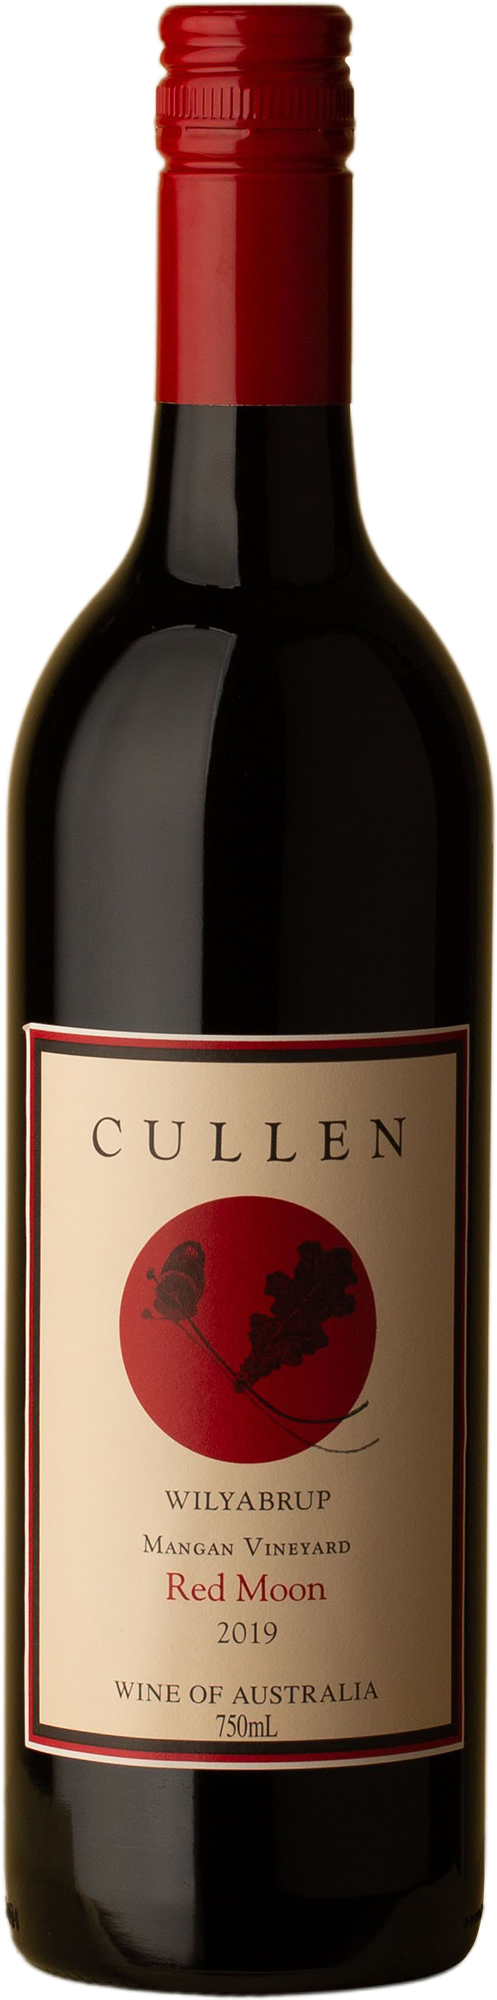 Cullen Wines - Red Moon Malbec / Petit Verdot / Merlot 2019 Red Wine